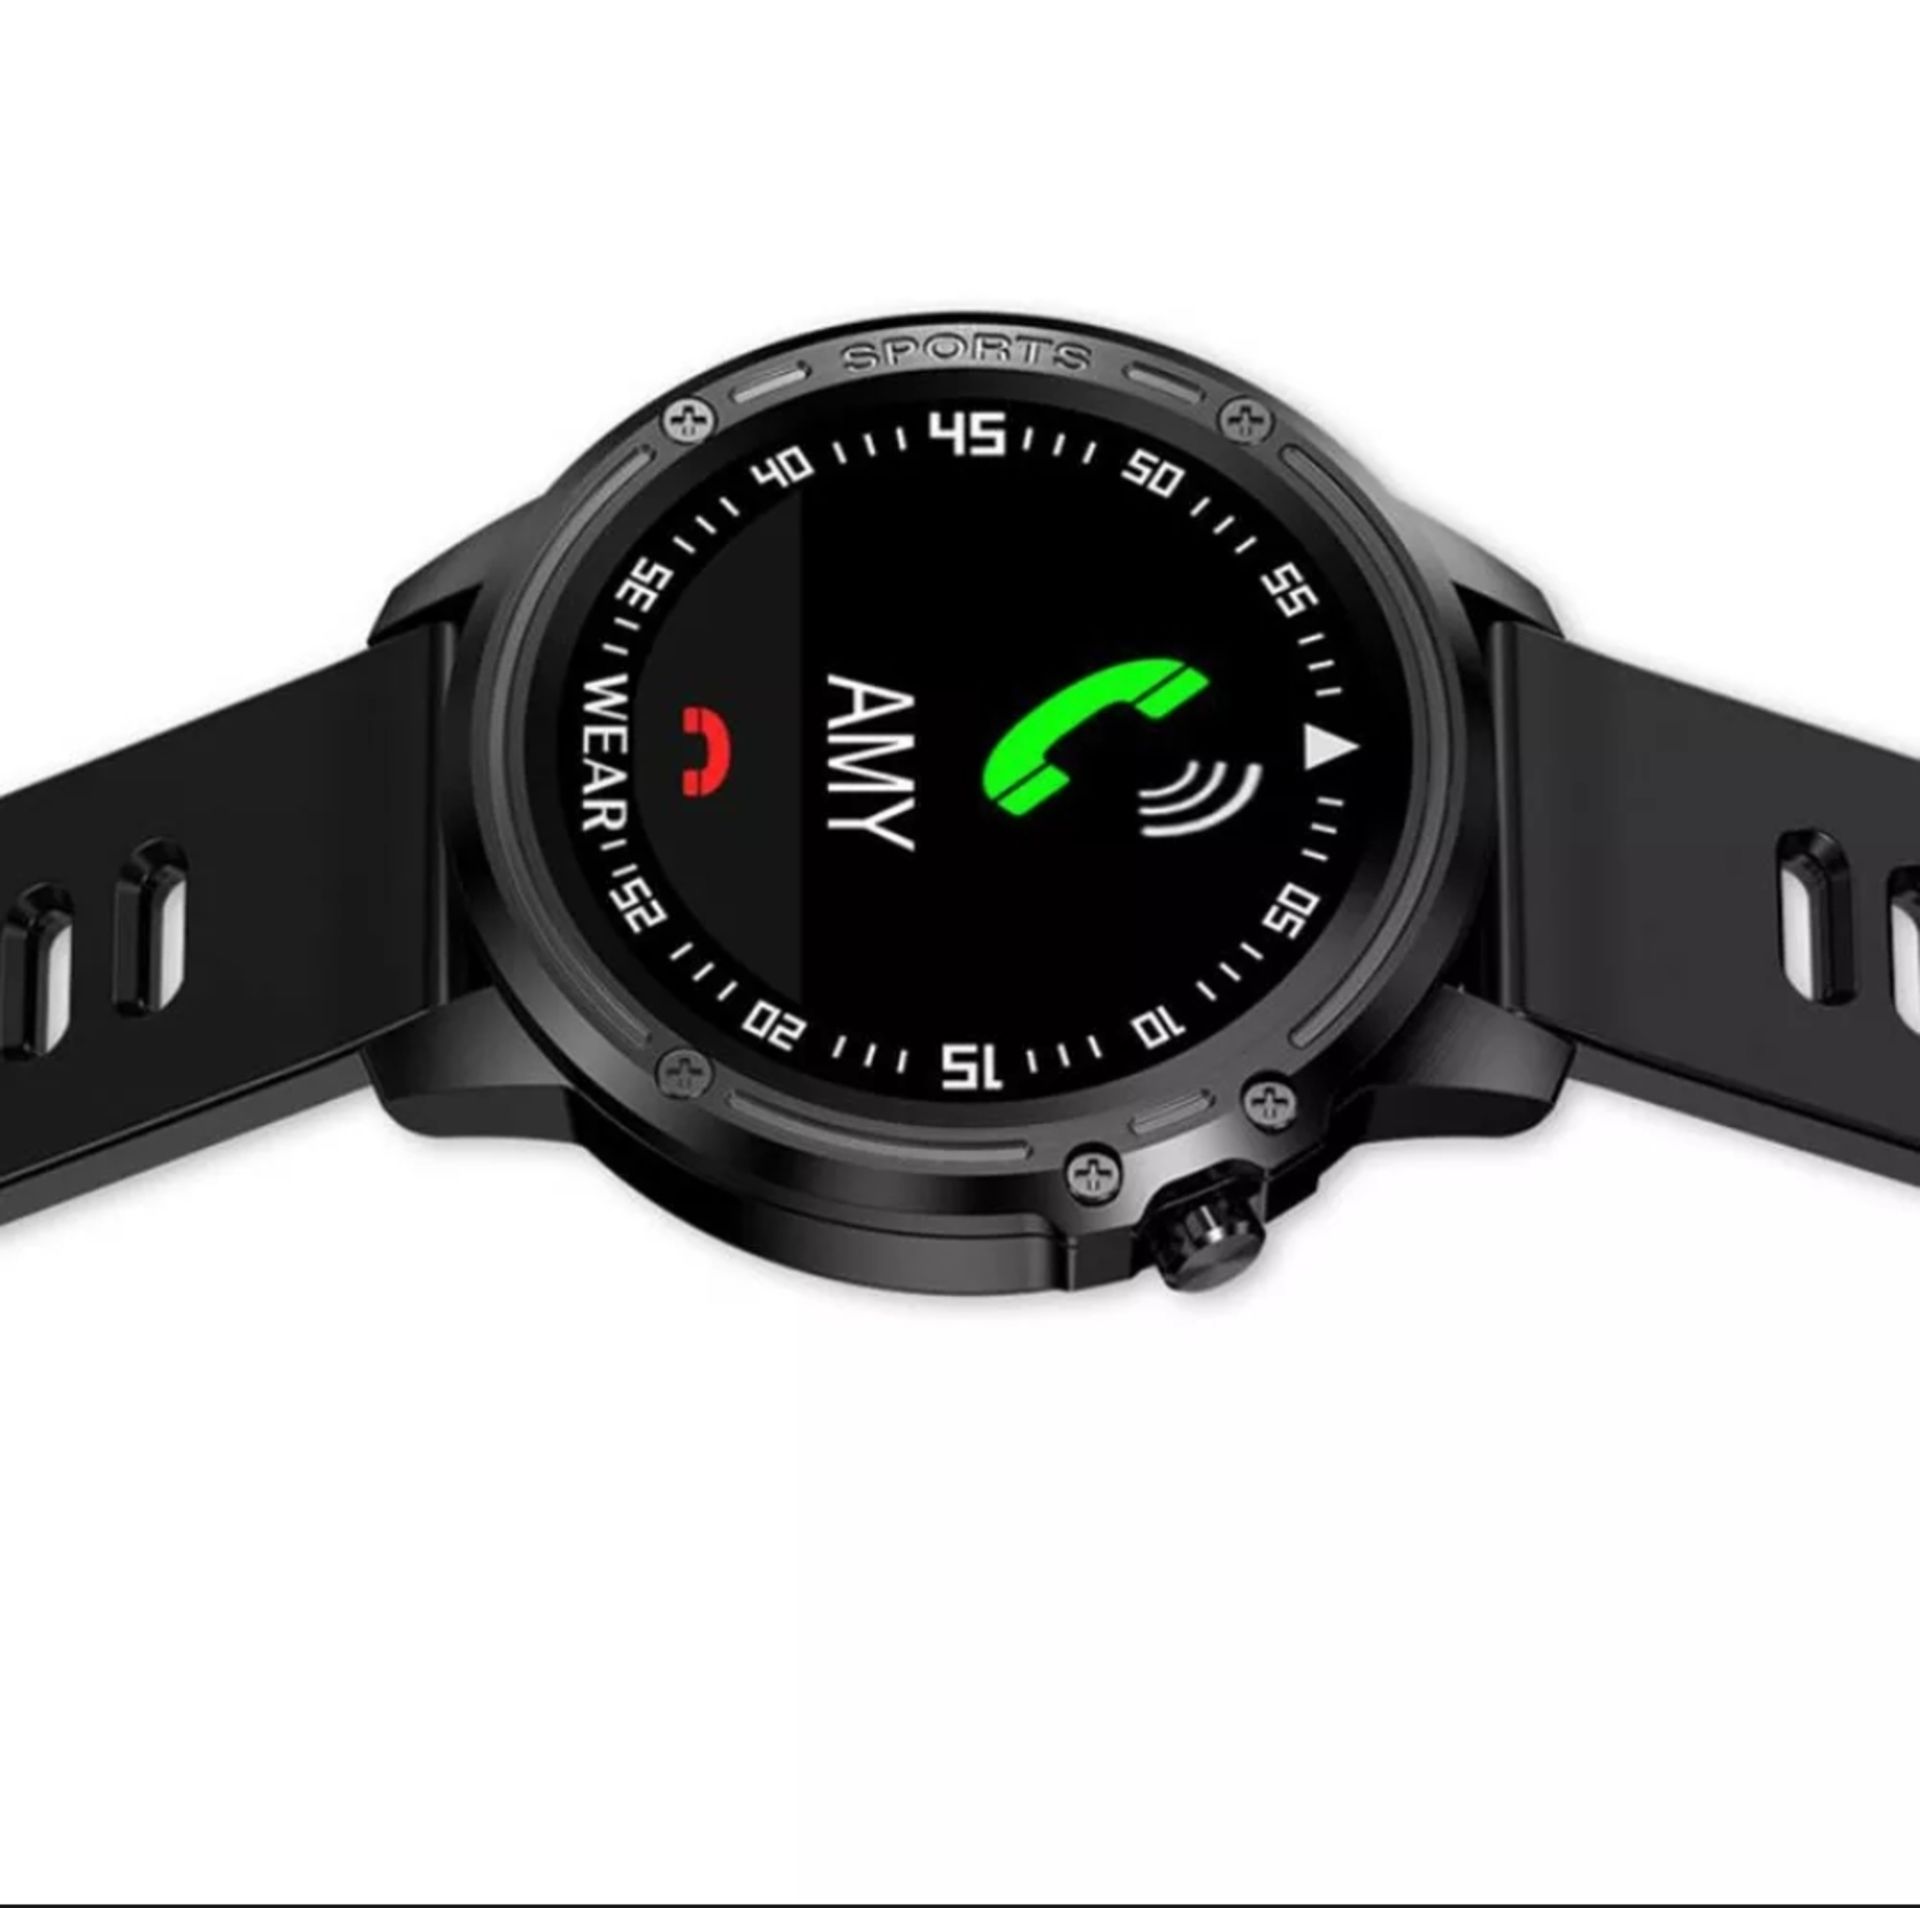 l8 blood pressure, oxygen, heart rate monitor, bt4.0 ip68 smart watch - grey/black strap - Image 13 of 23